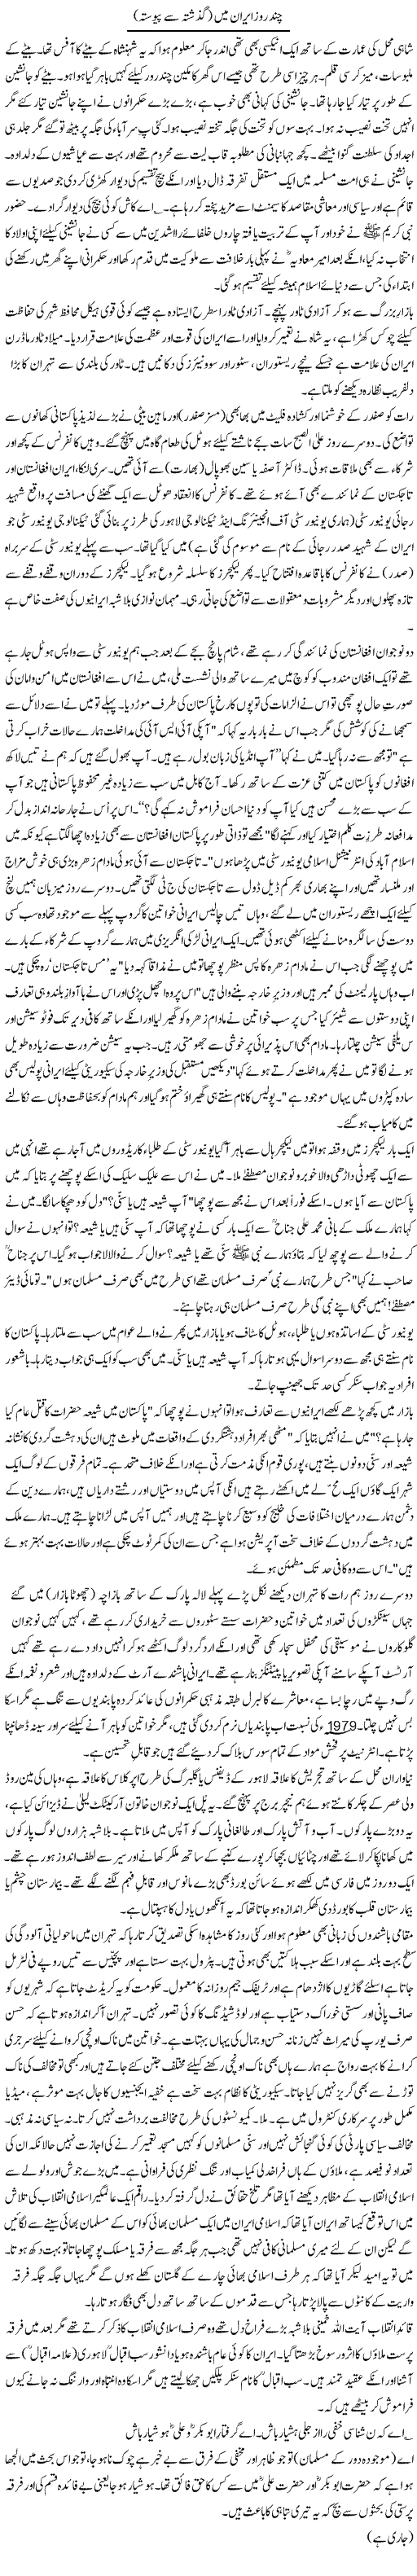 Chand Roz Iran Mein (2) | Zulfiqar Ahmed Cheema | Daily Urdu Columns